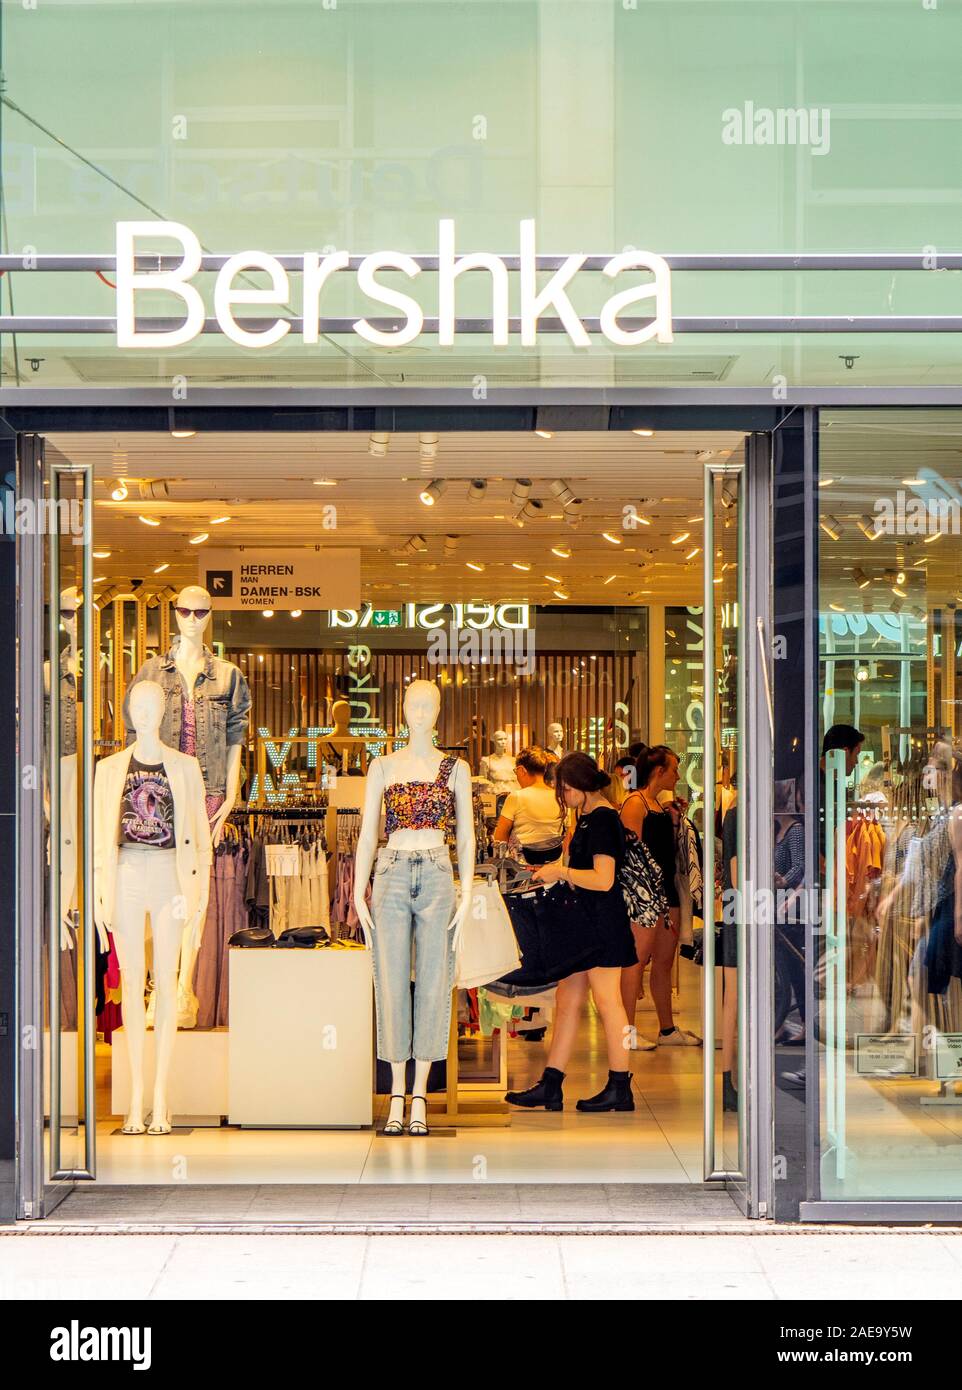 Bershka retailer fotografías e imágenes alta resolución Alamy